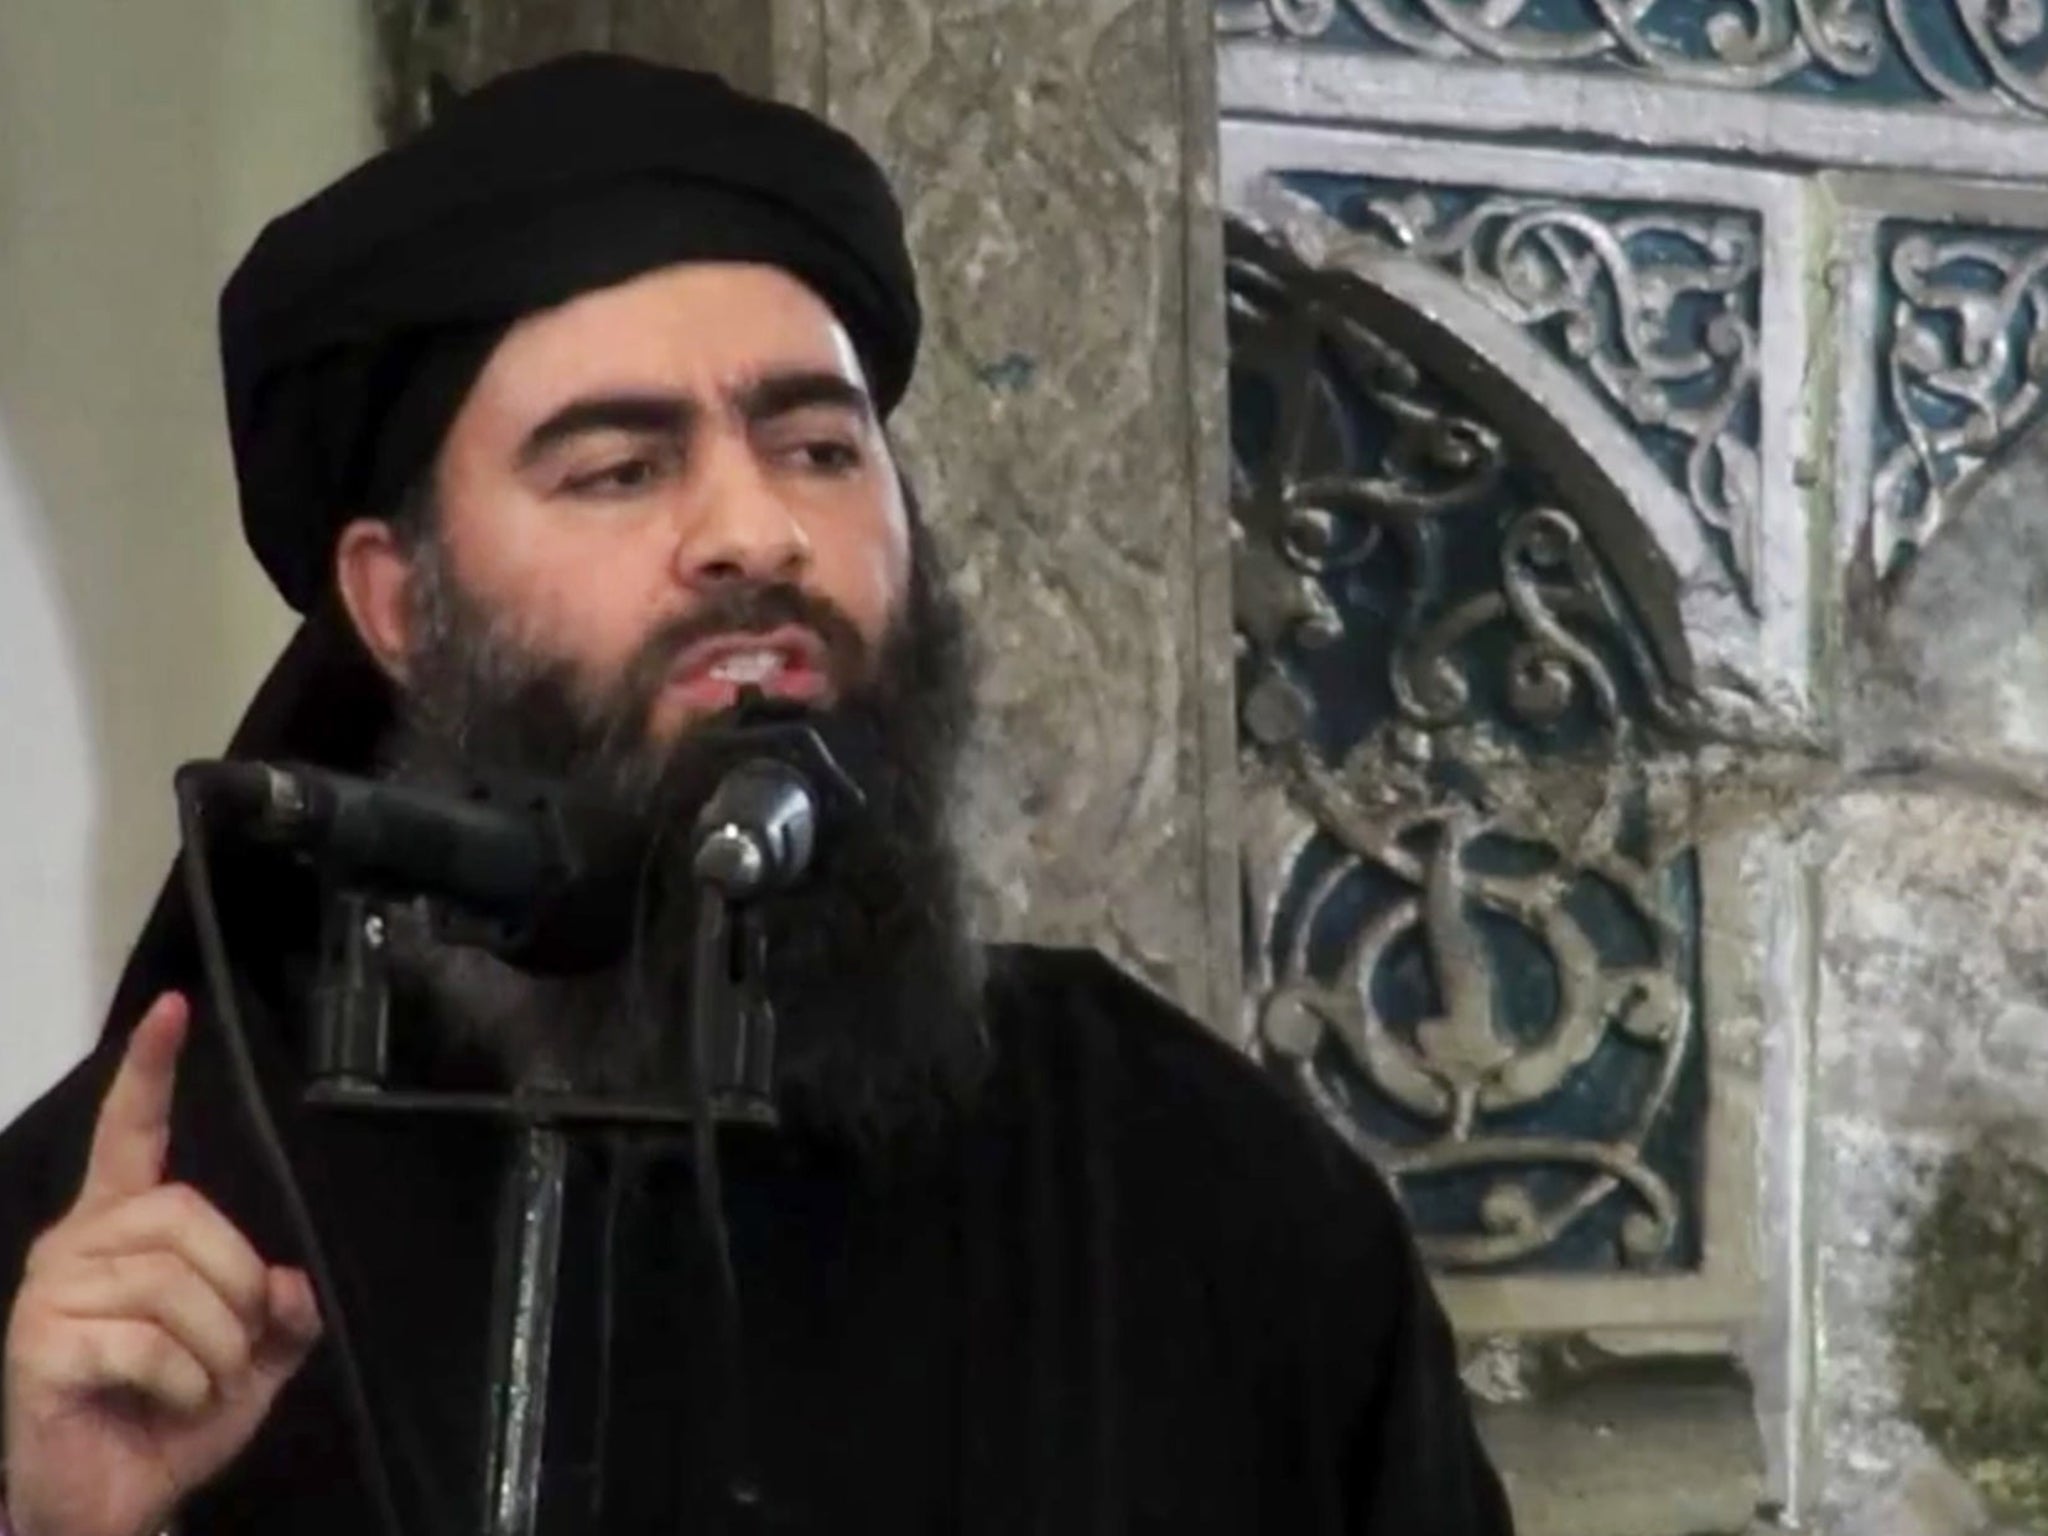 The self-appointed caliph Abu Bakr al-Baghdadi